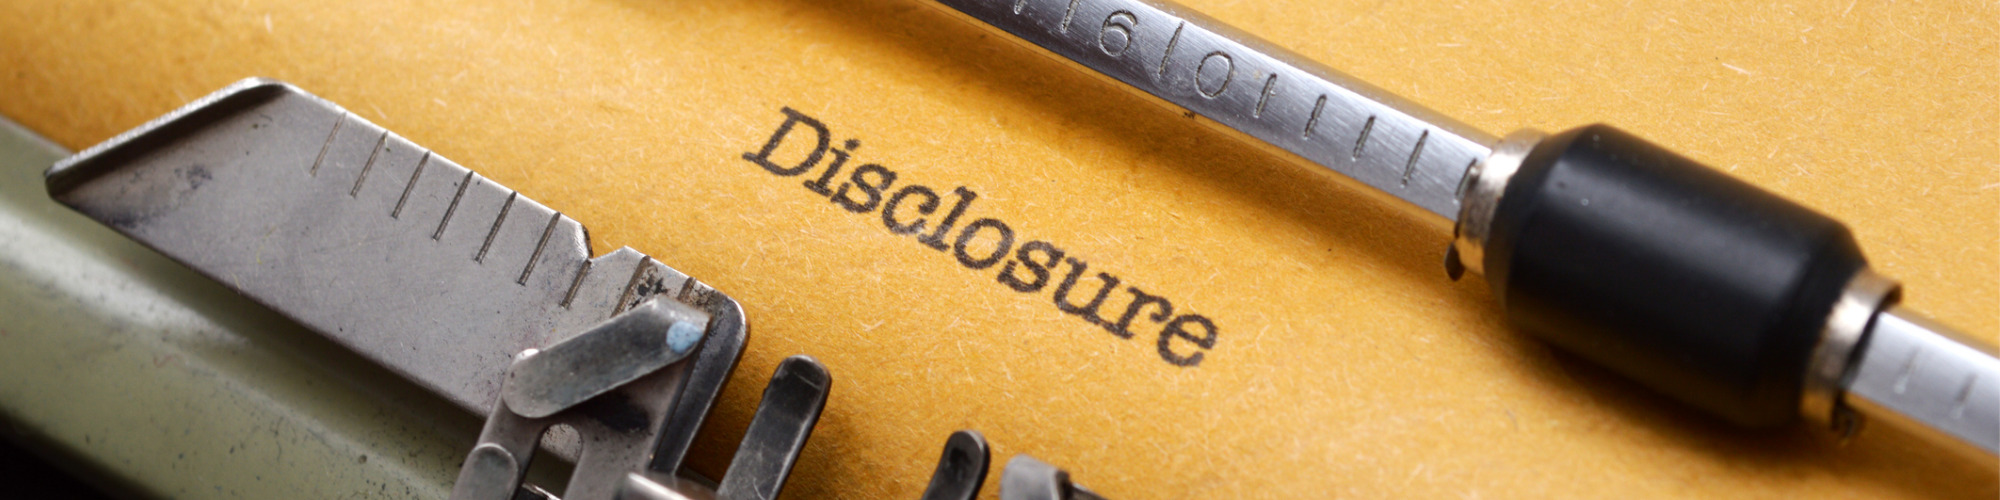 Disclosure - A Litigator's Guide